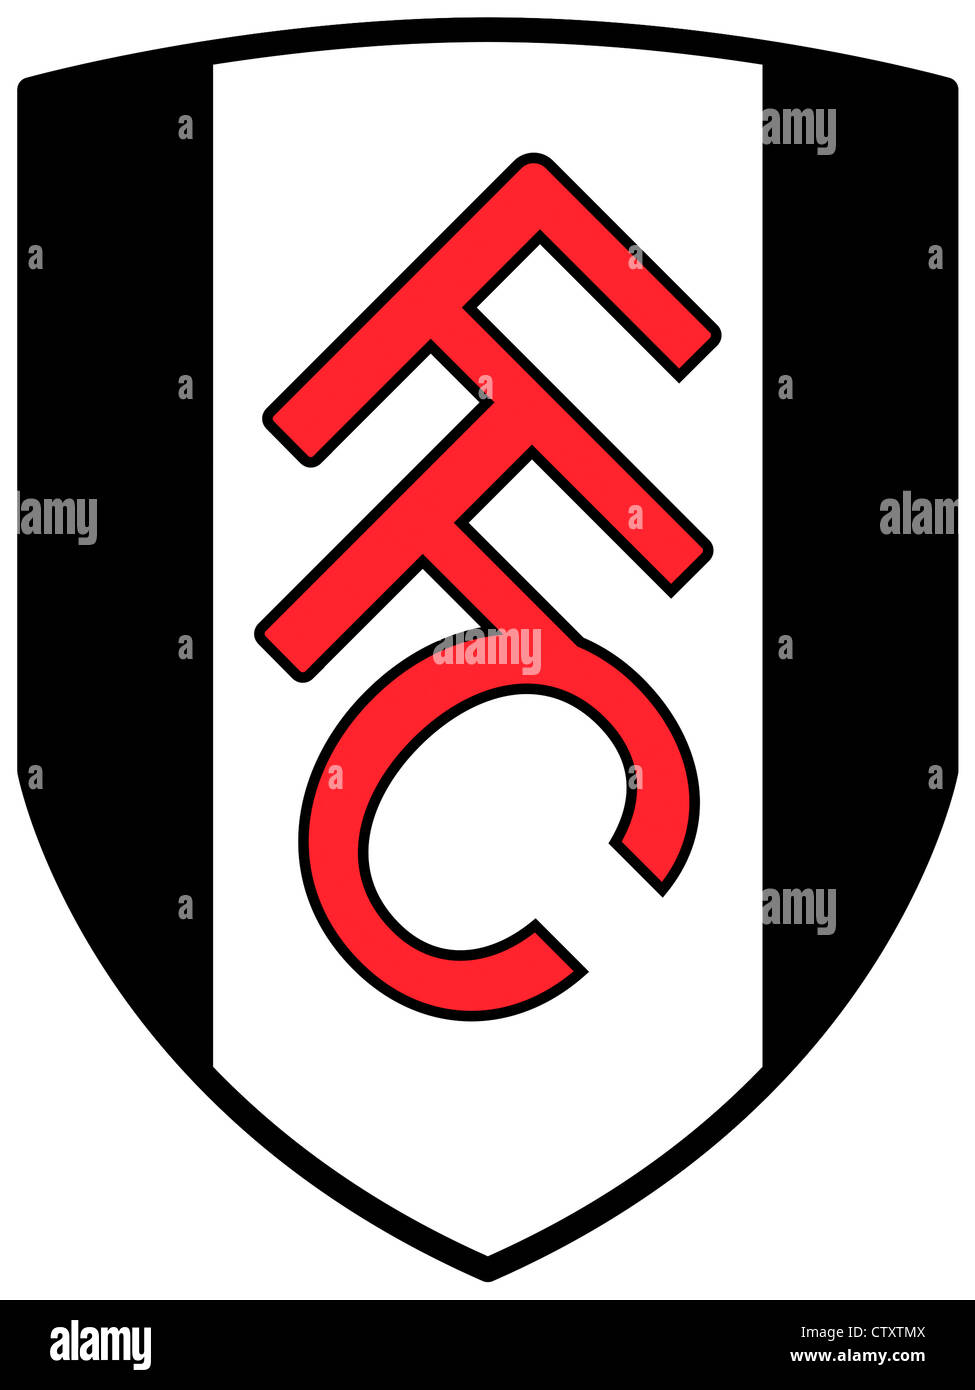 Logo of English football team Fulham Football Club FFC. Stock Photo